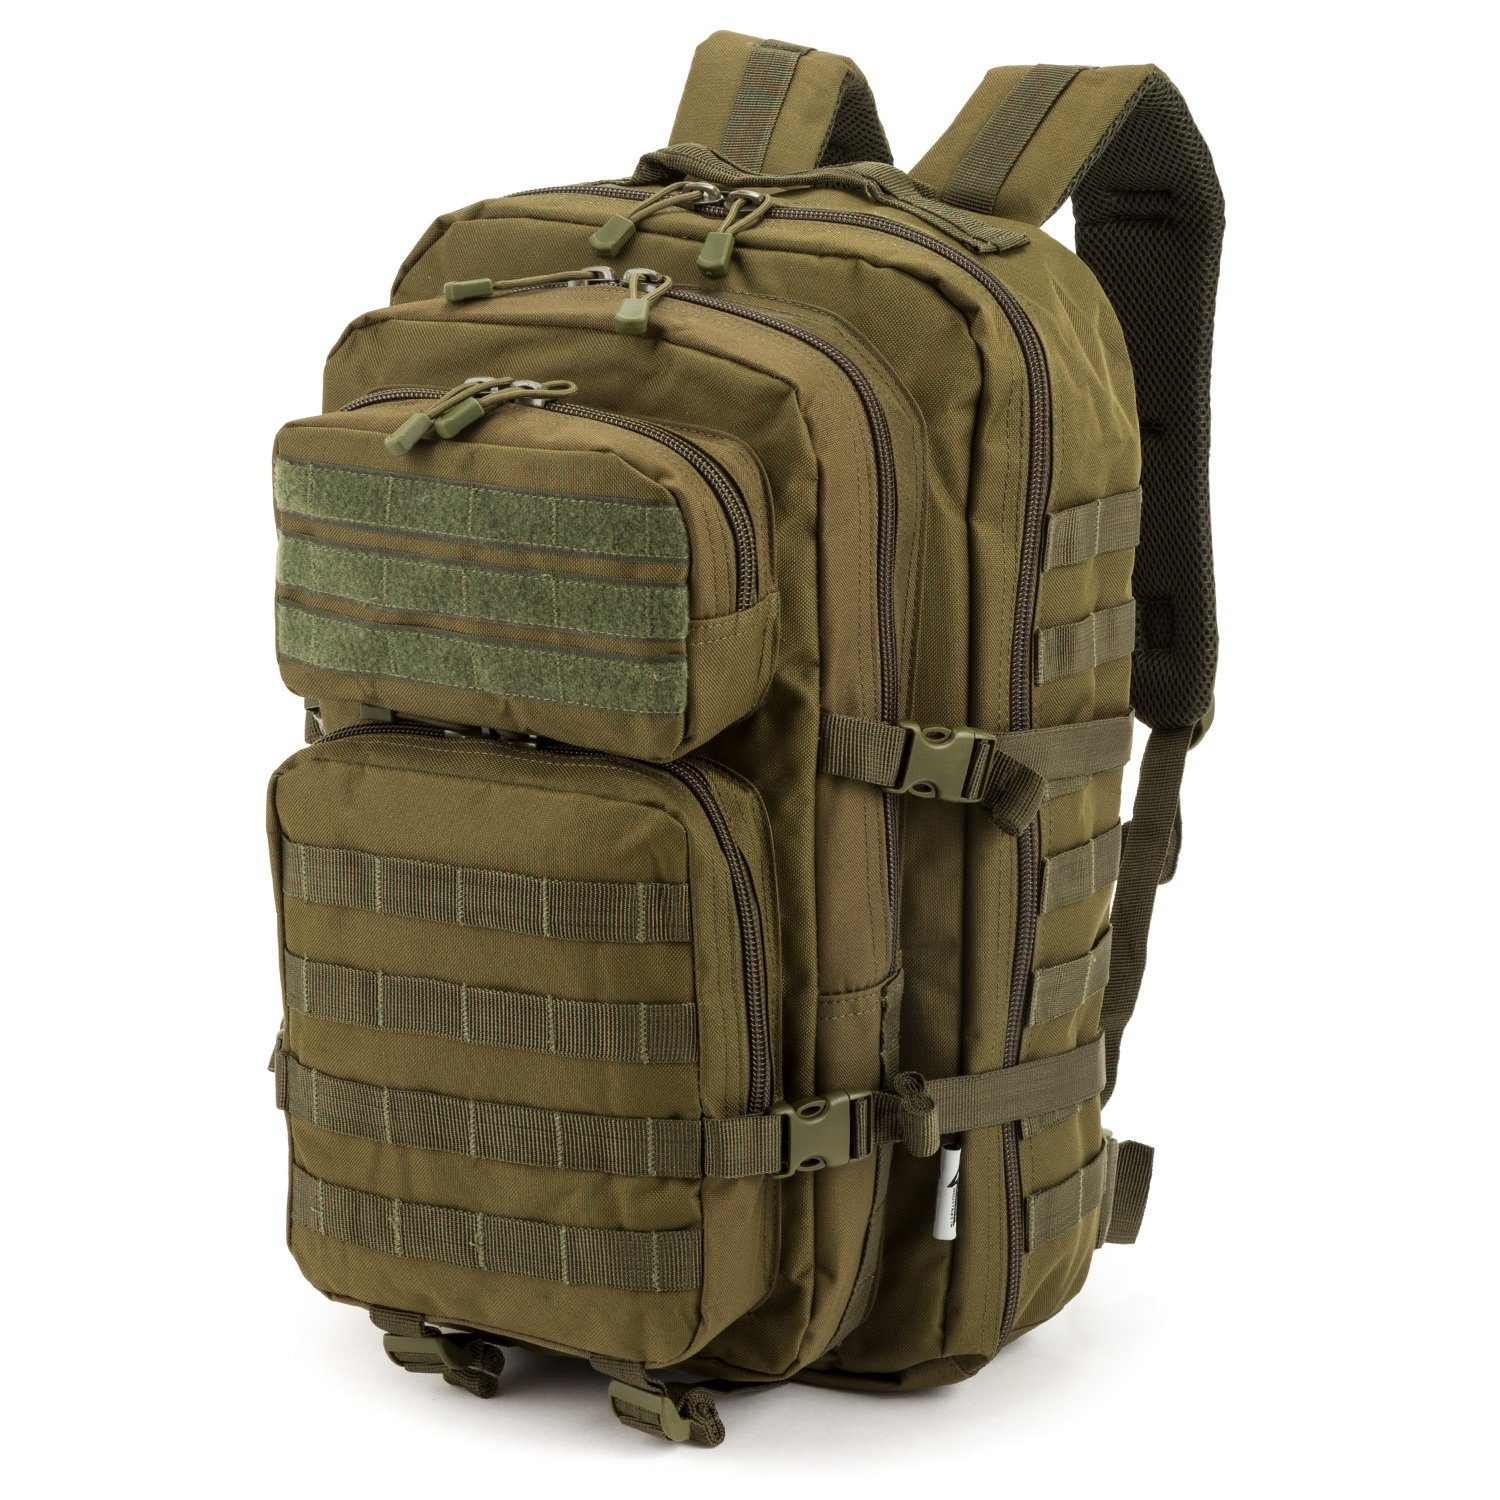 Commando-Industries Rucksack US Army Assault Pack II Oliv